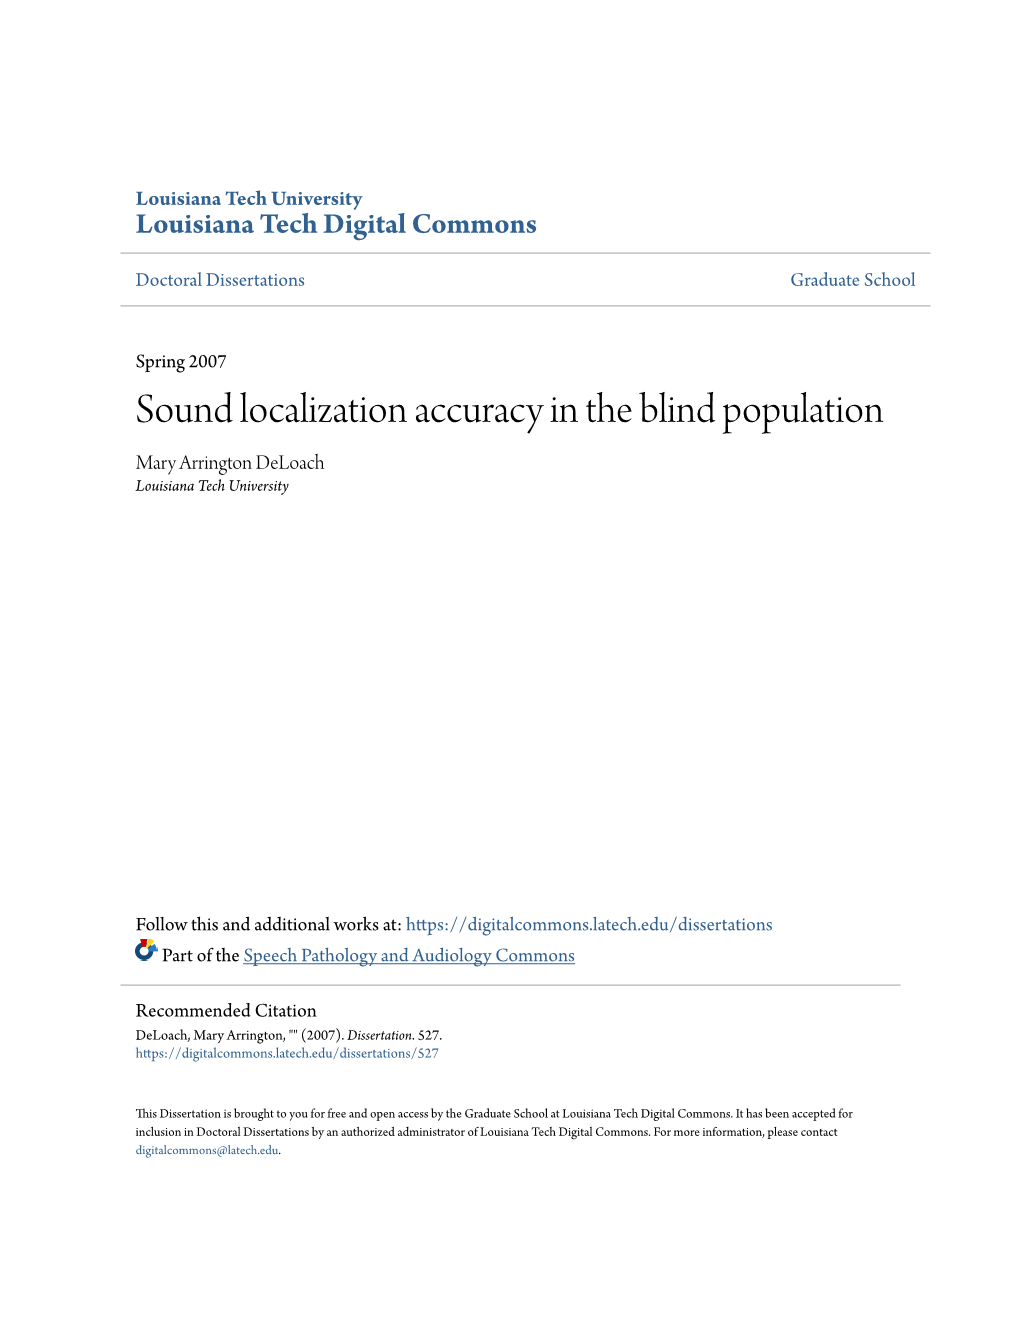 Sound Localization Accuracy in the Blind Population Mary Arrington Deloach Louisiana Tech University